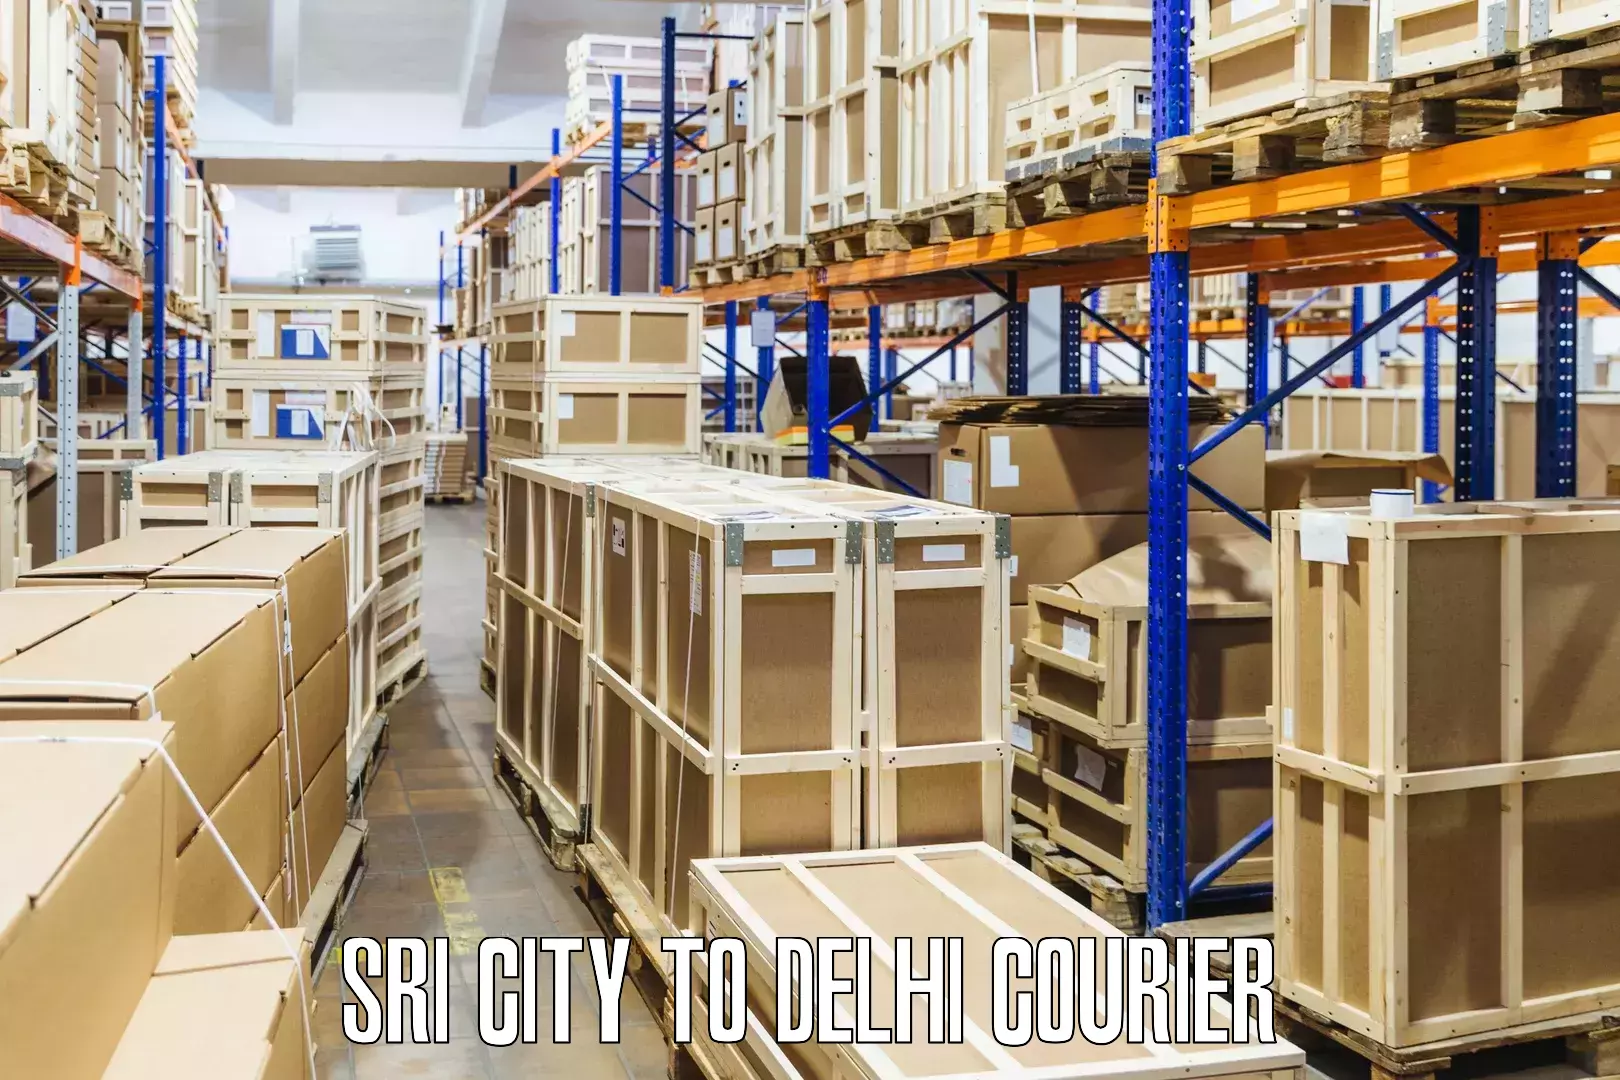 Courier service innovation Sri City to Delhi